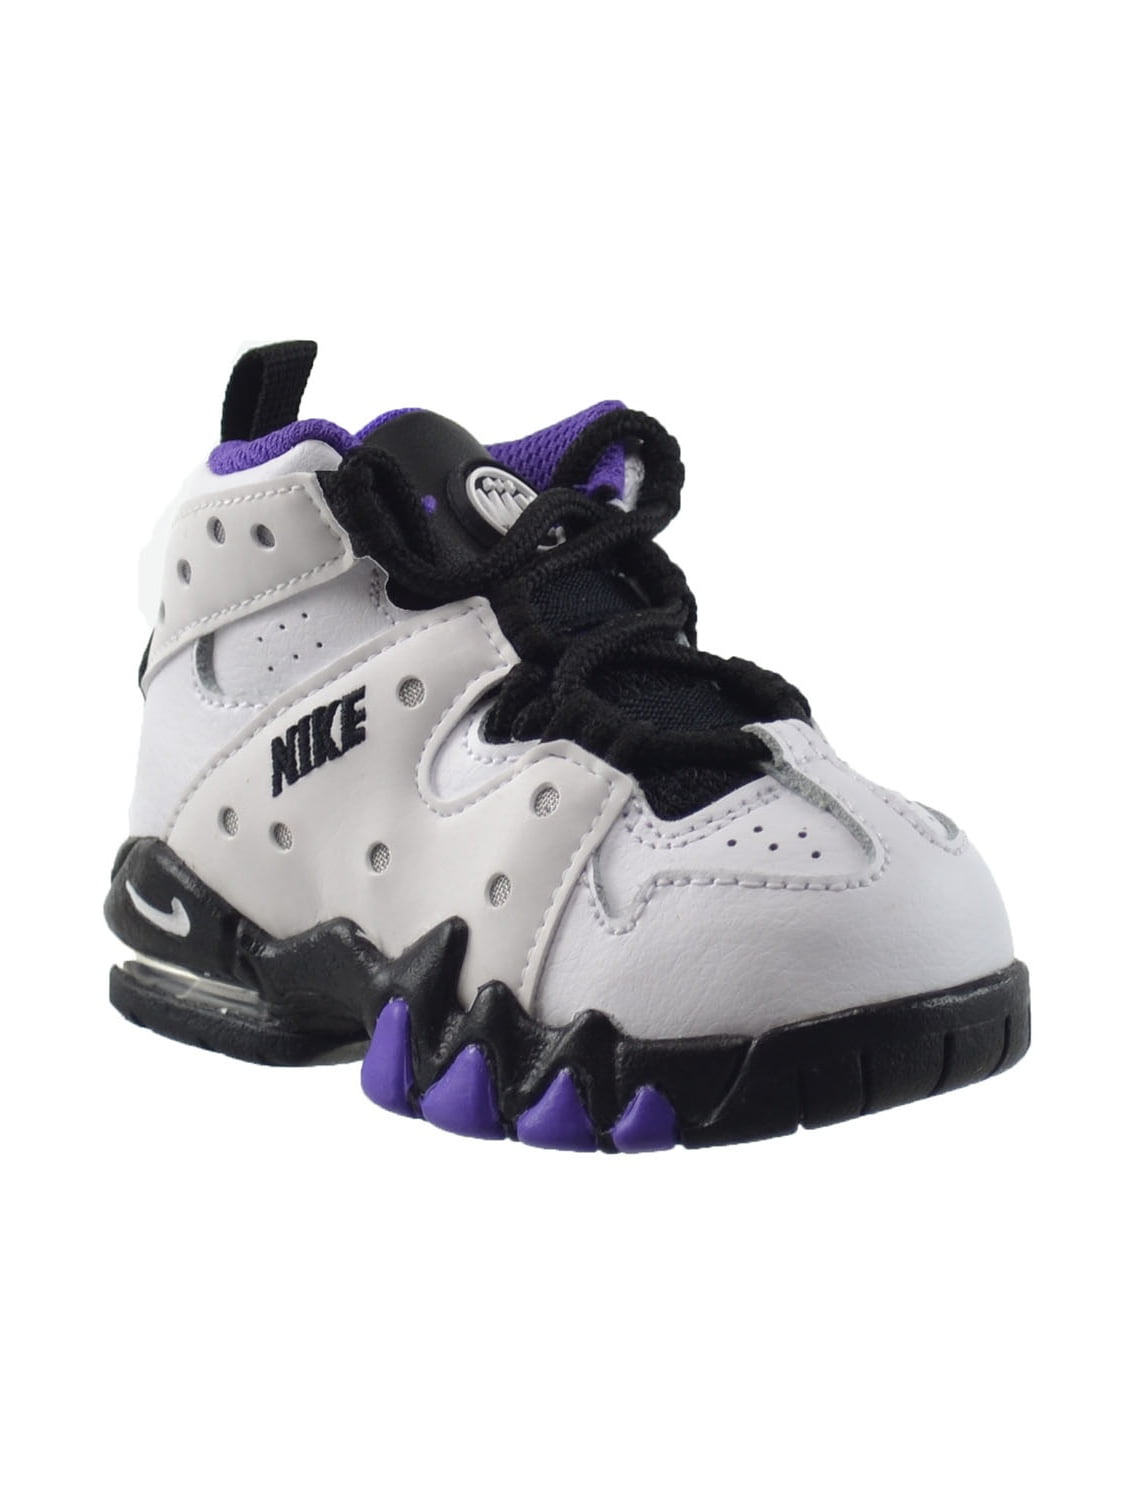 Nike Air Max Cb 94 Td Toddlers Baby Infant Shoes White Black Purple 4086 105 9 M Us Walmart Com